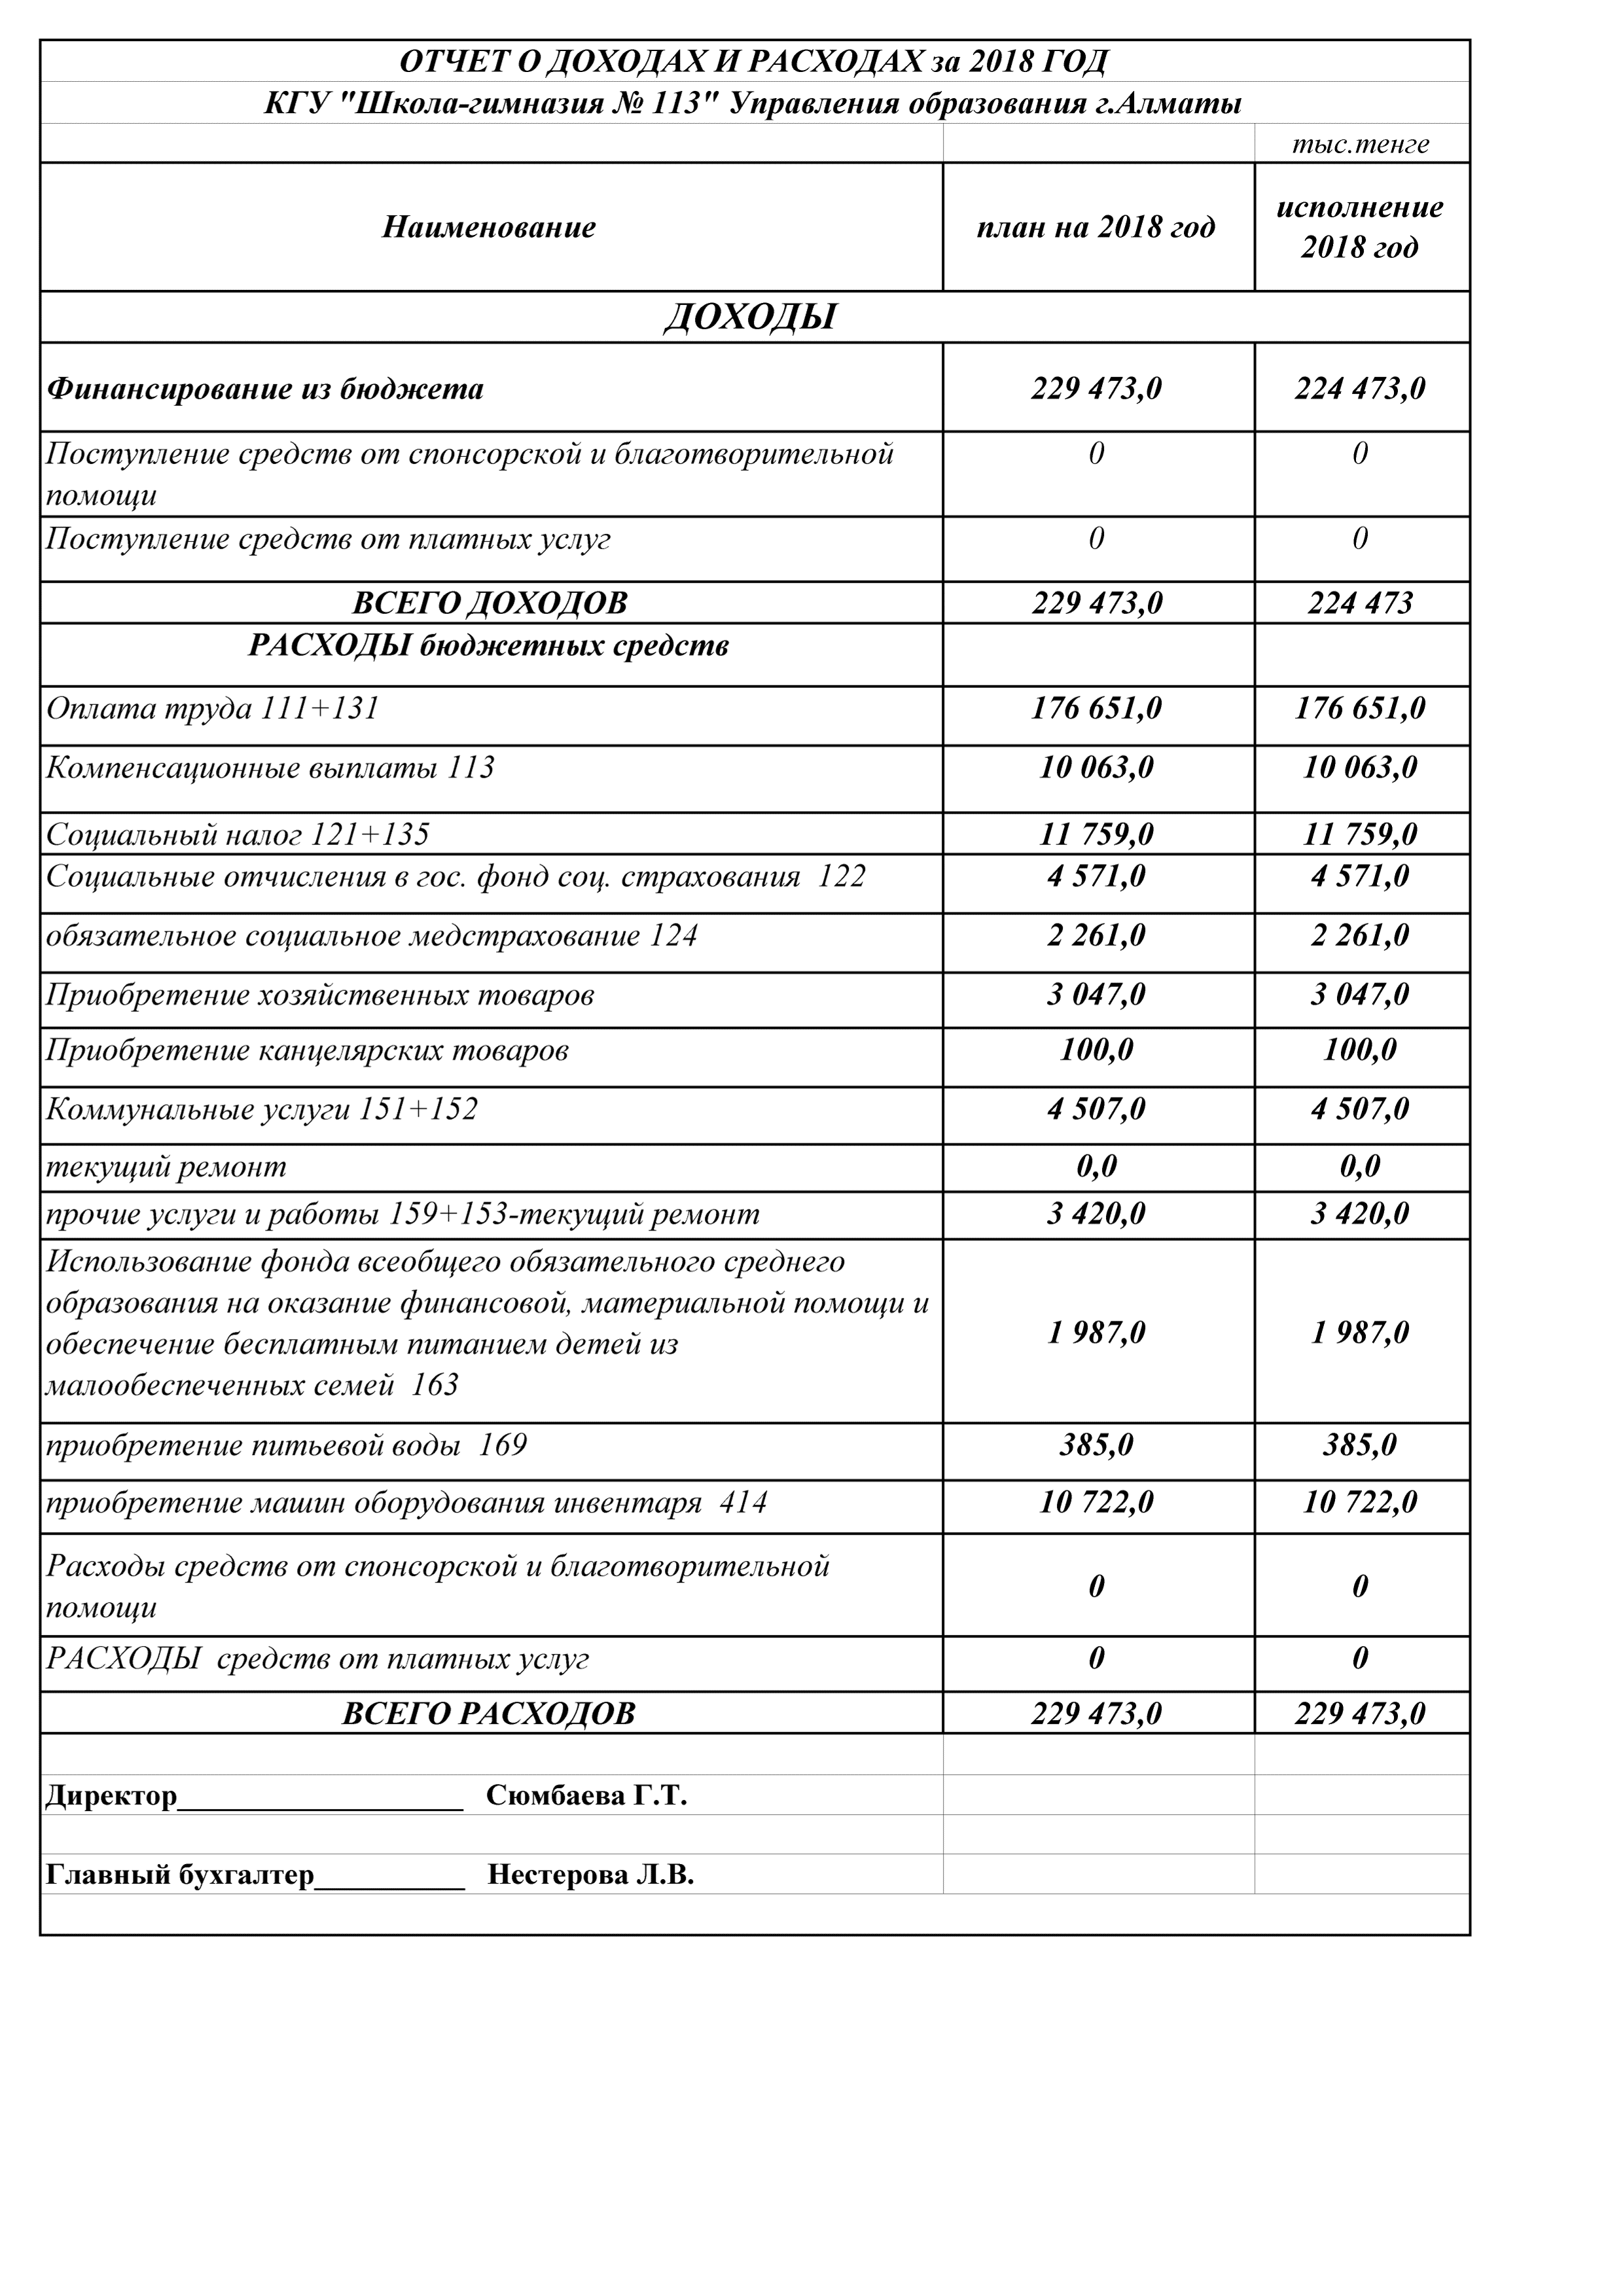 Отчет о доходах и расходах за 4 кв 2018